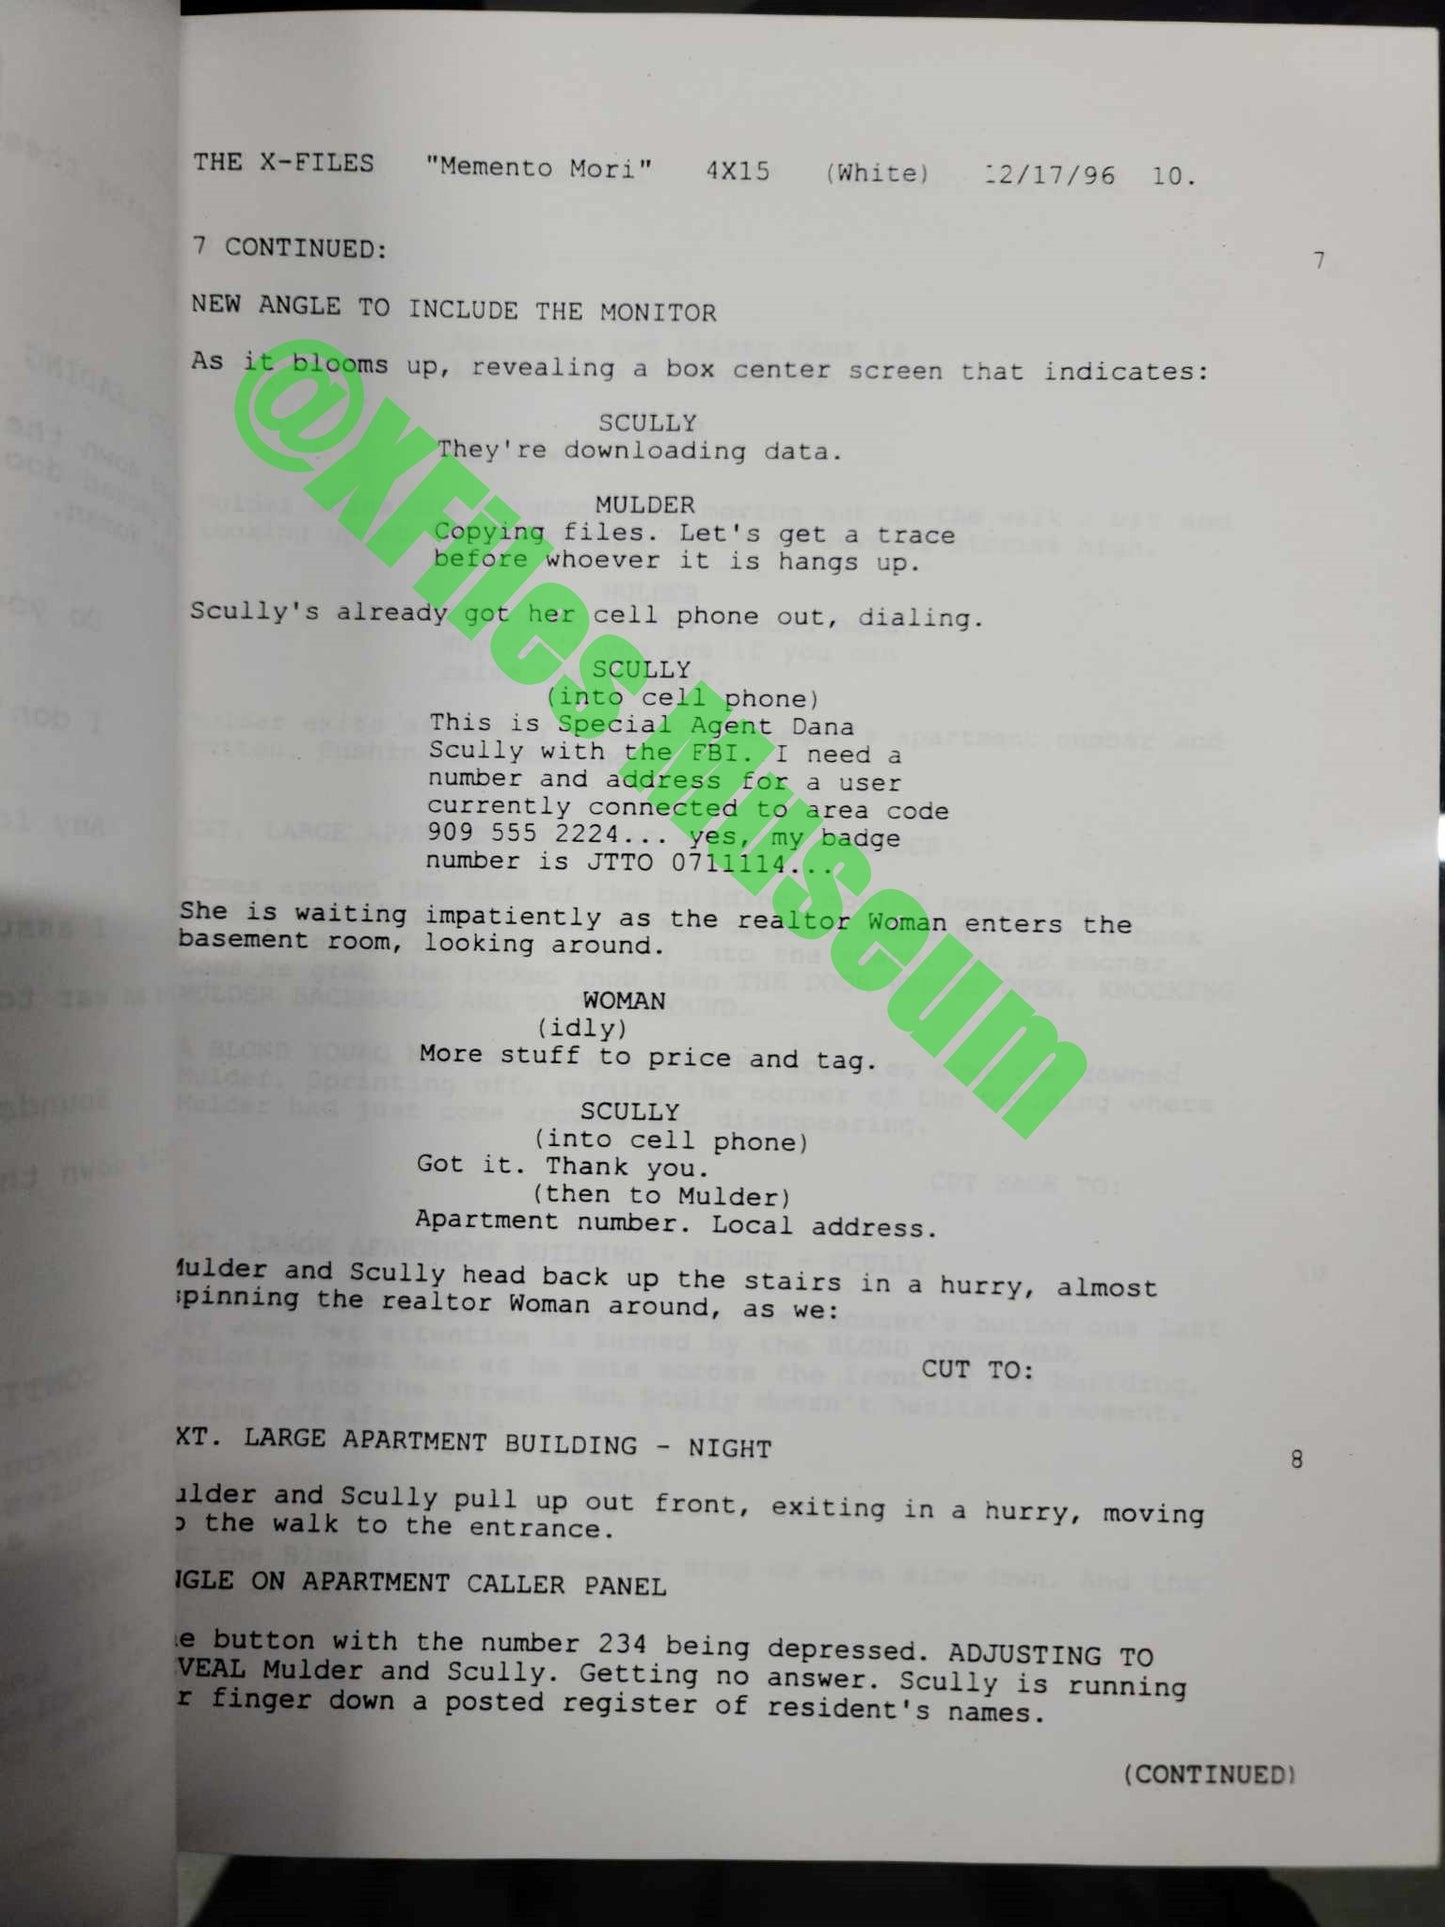 X Files Script -Episode "MOMENTO MORI" - Not Production Used